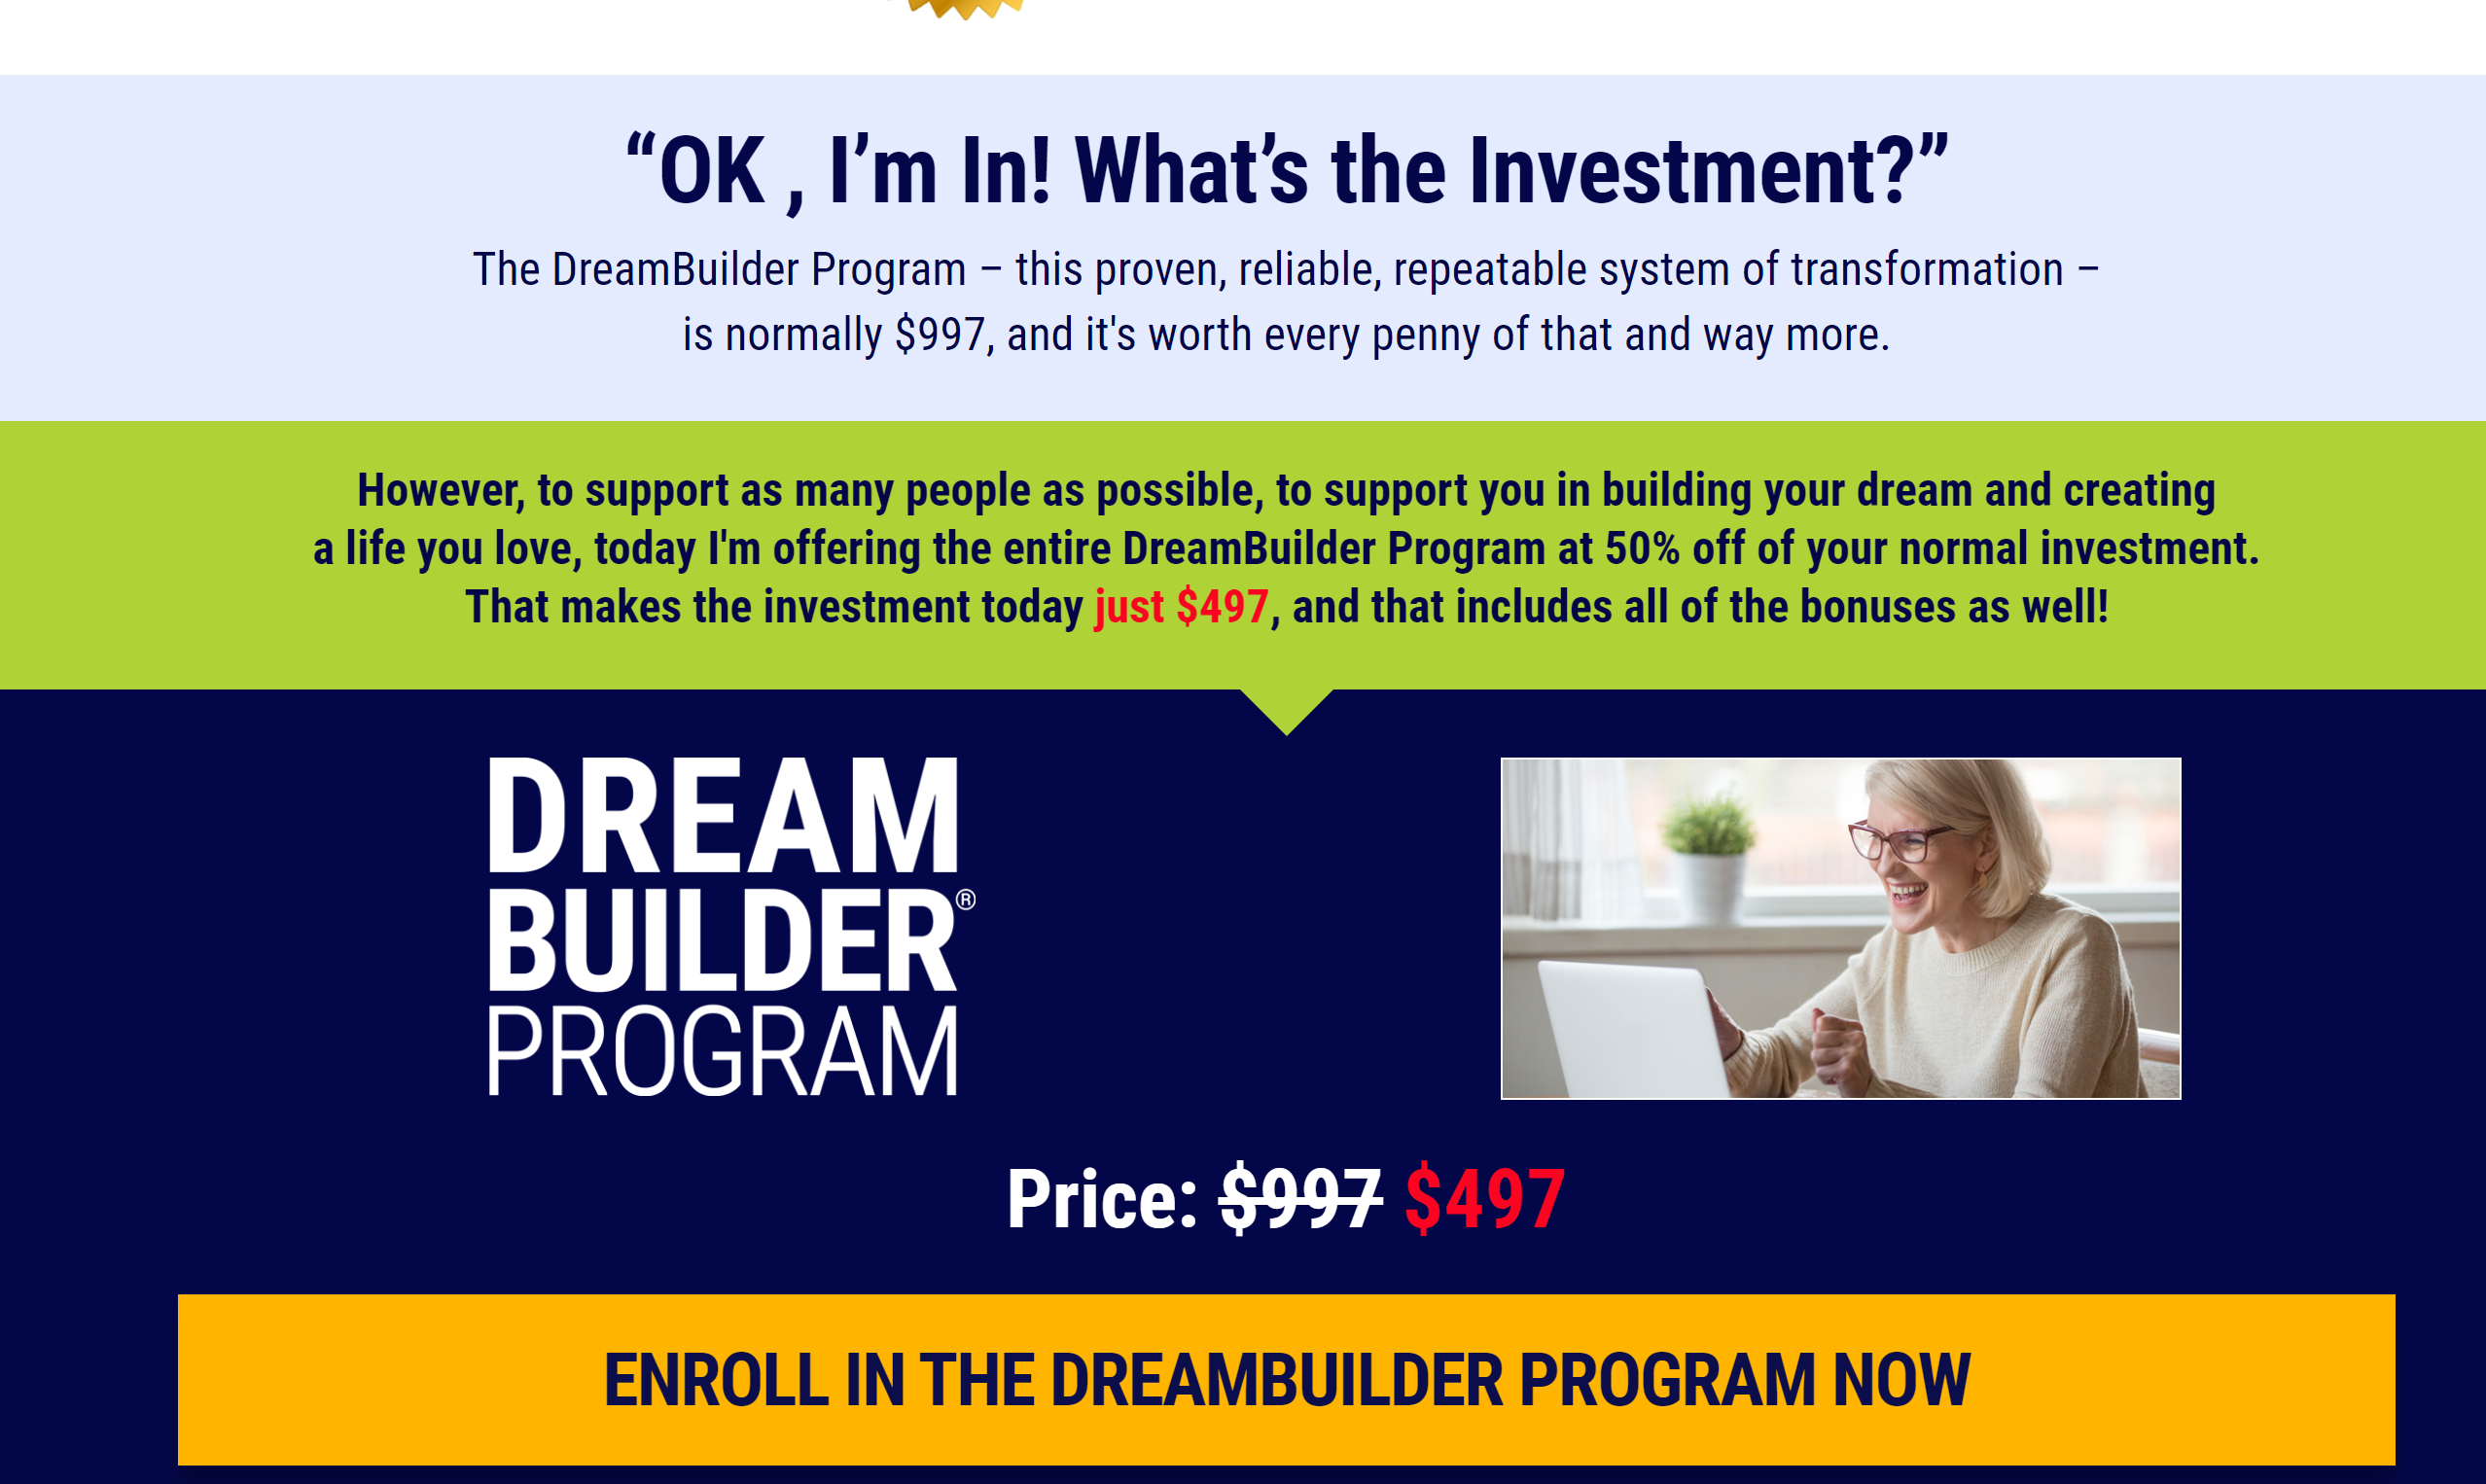 dreambuilder prrogram review online